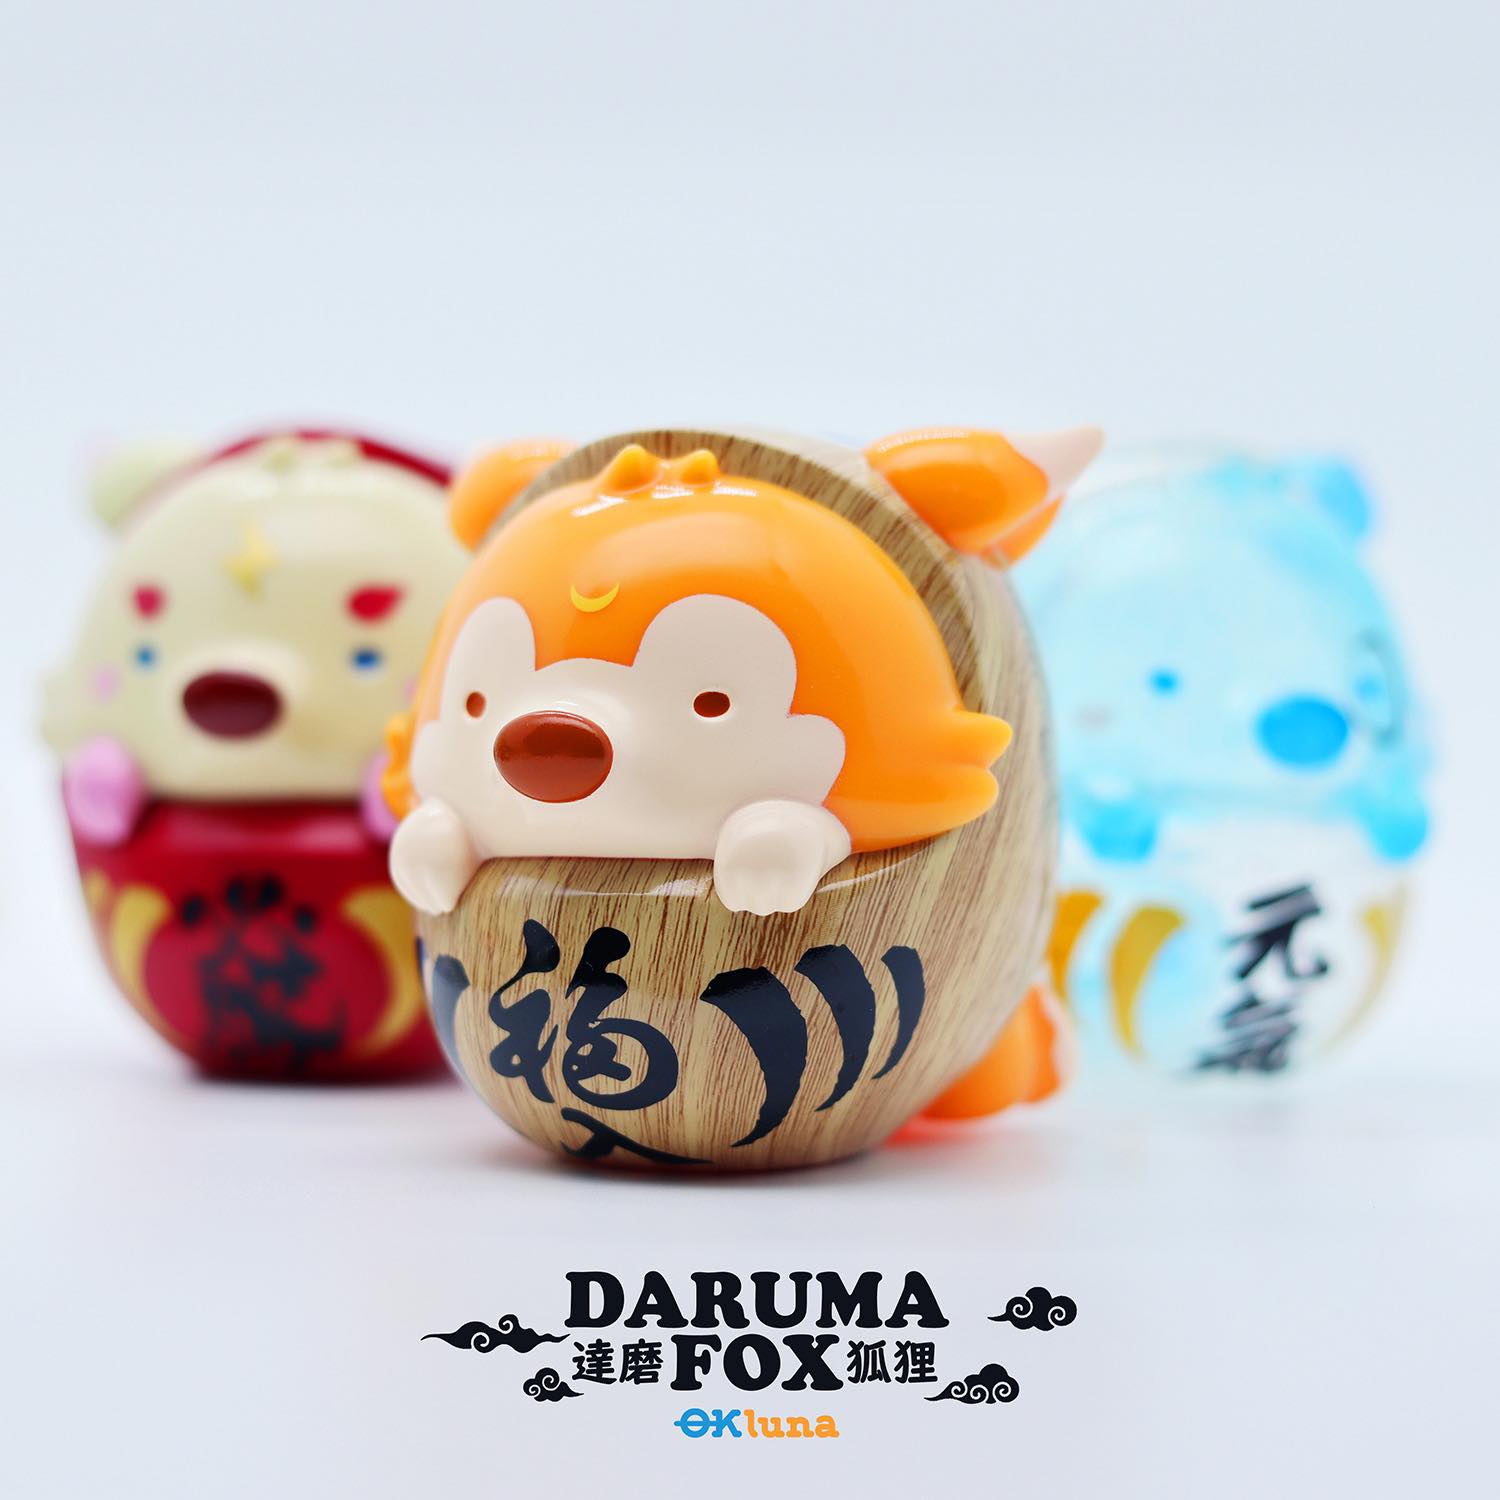 Daruma Fox - JOBI by Ok Luna